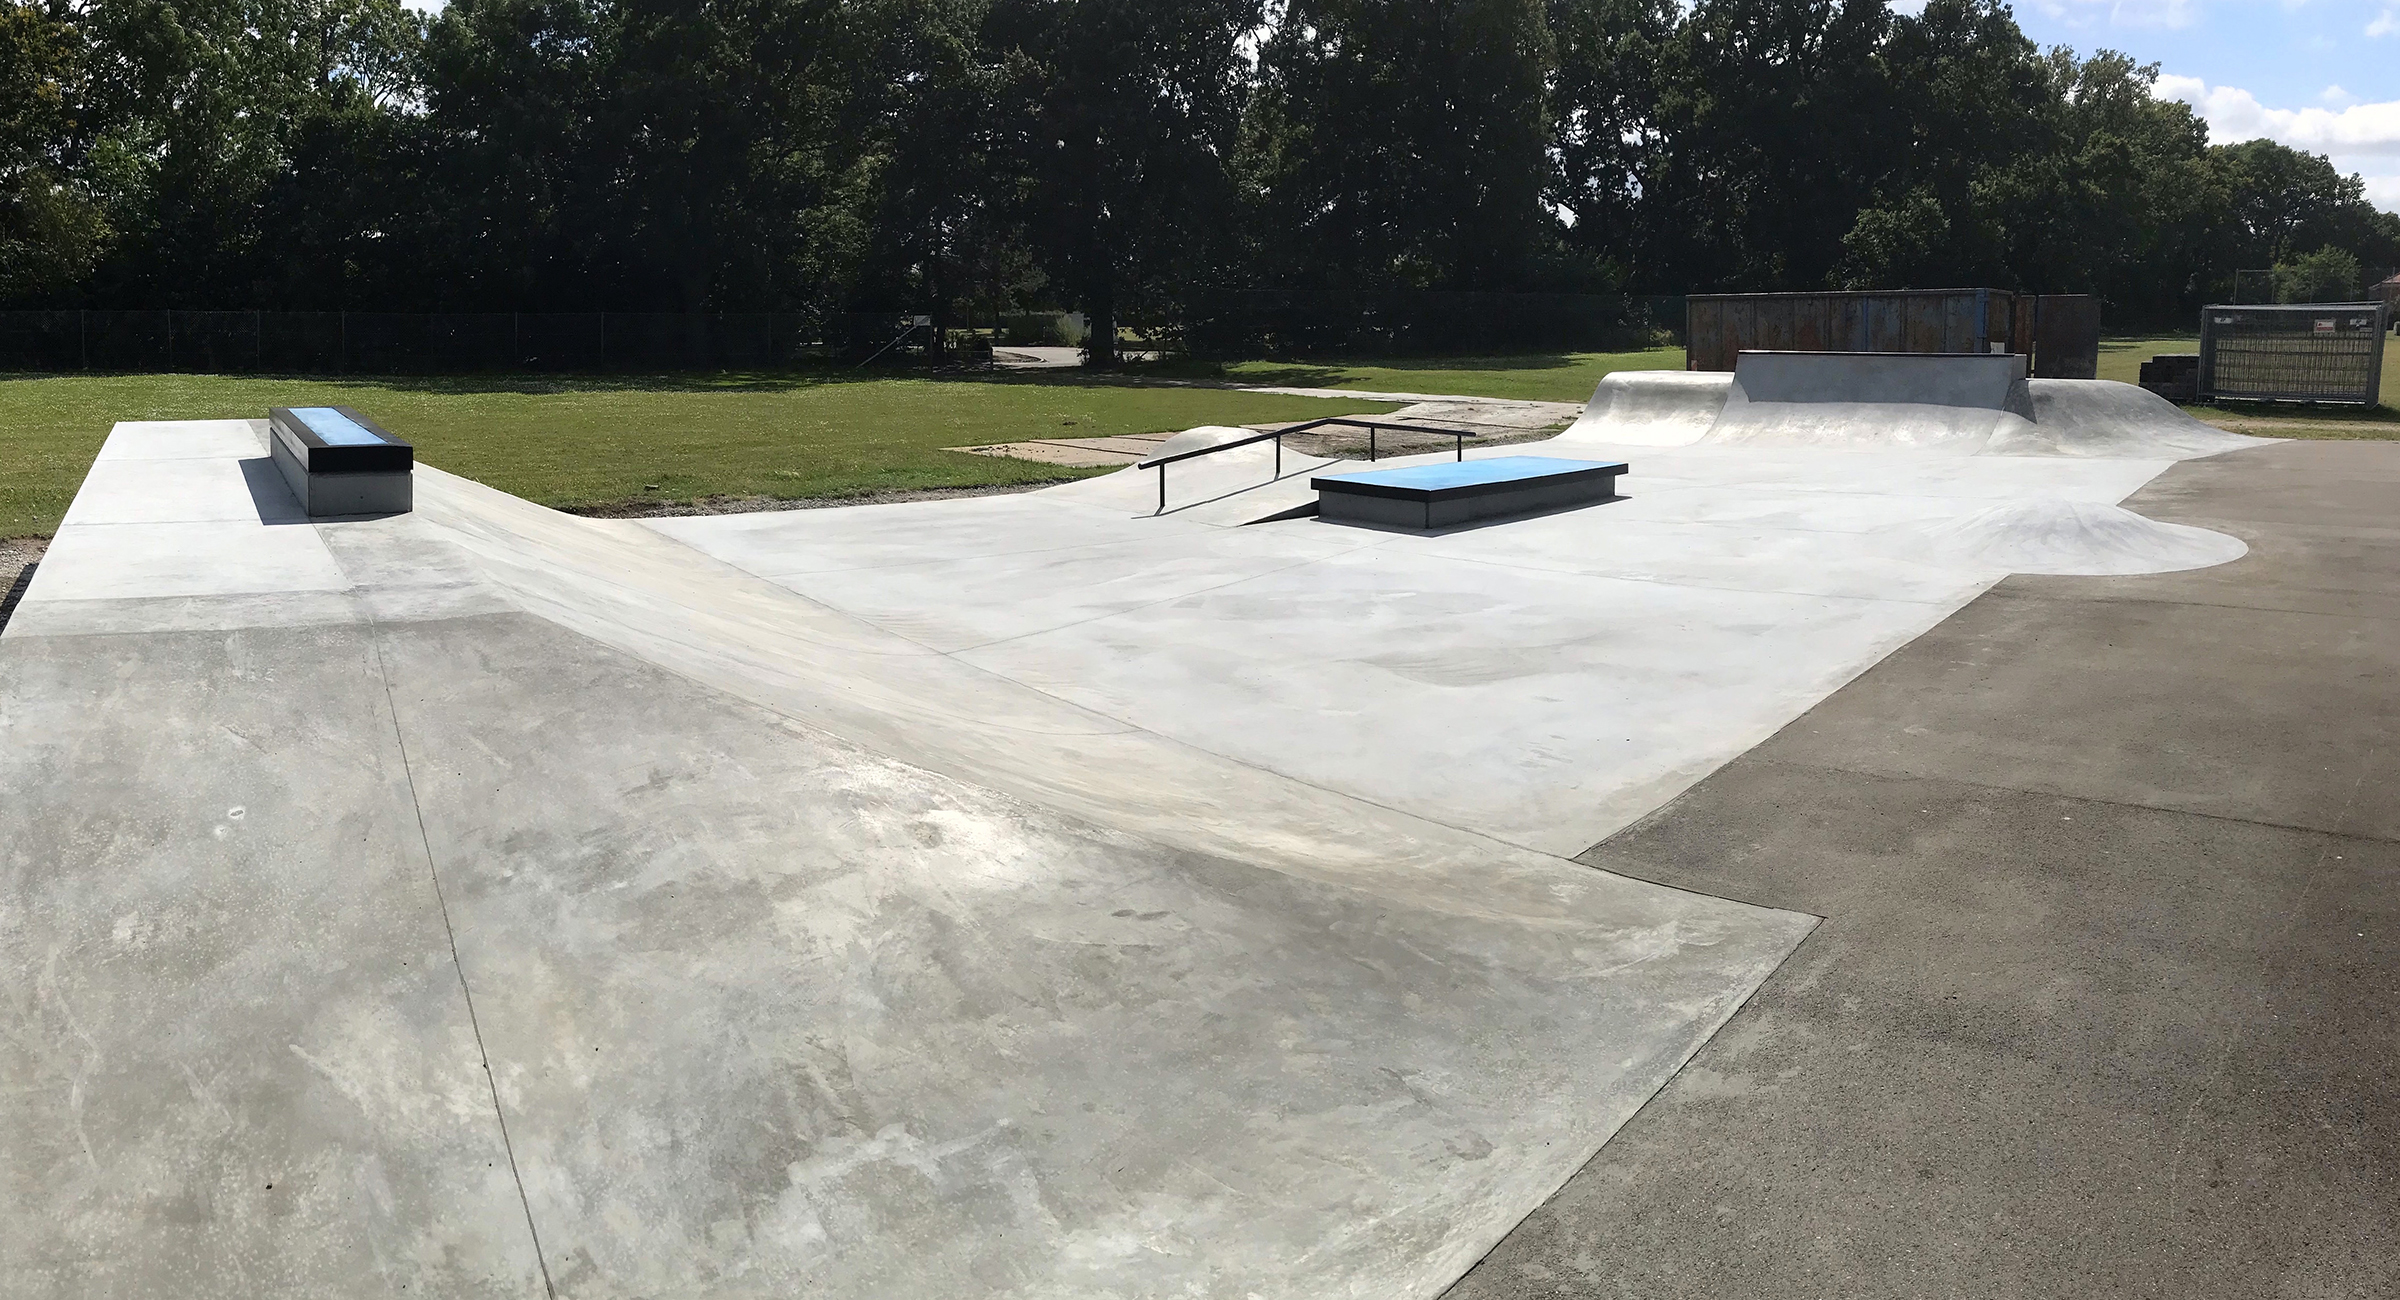 Her ses et hip i beton i forgrunden og en mindre skatepark bagved